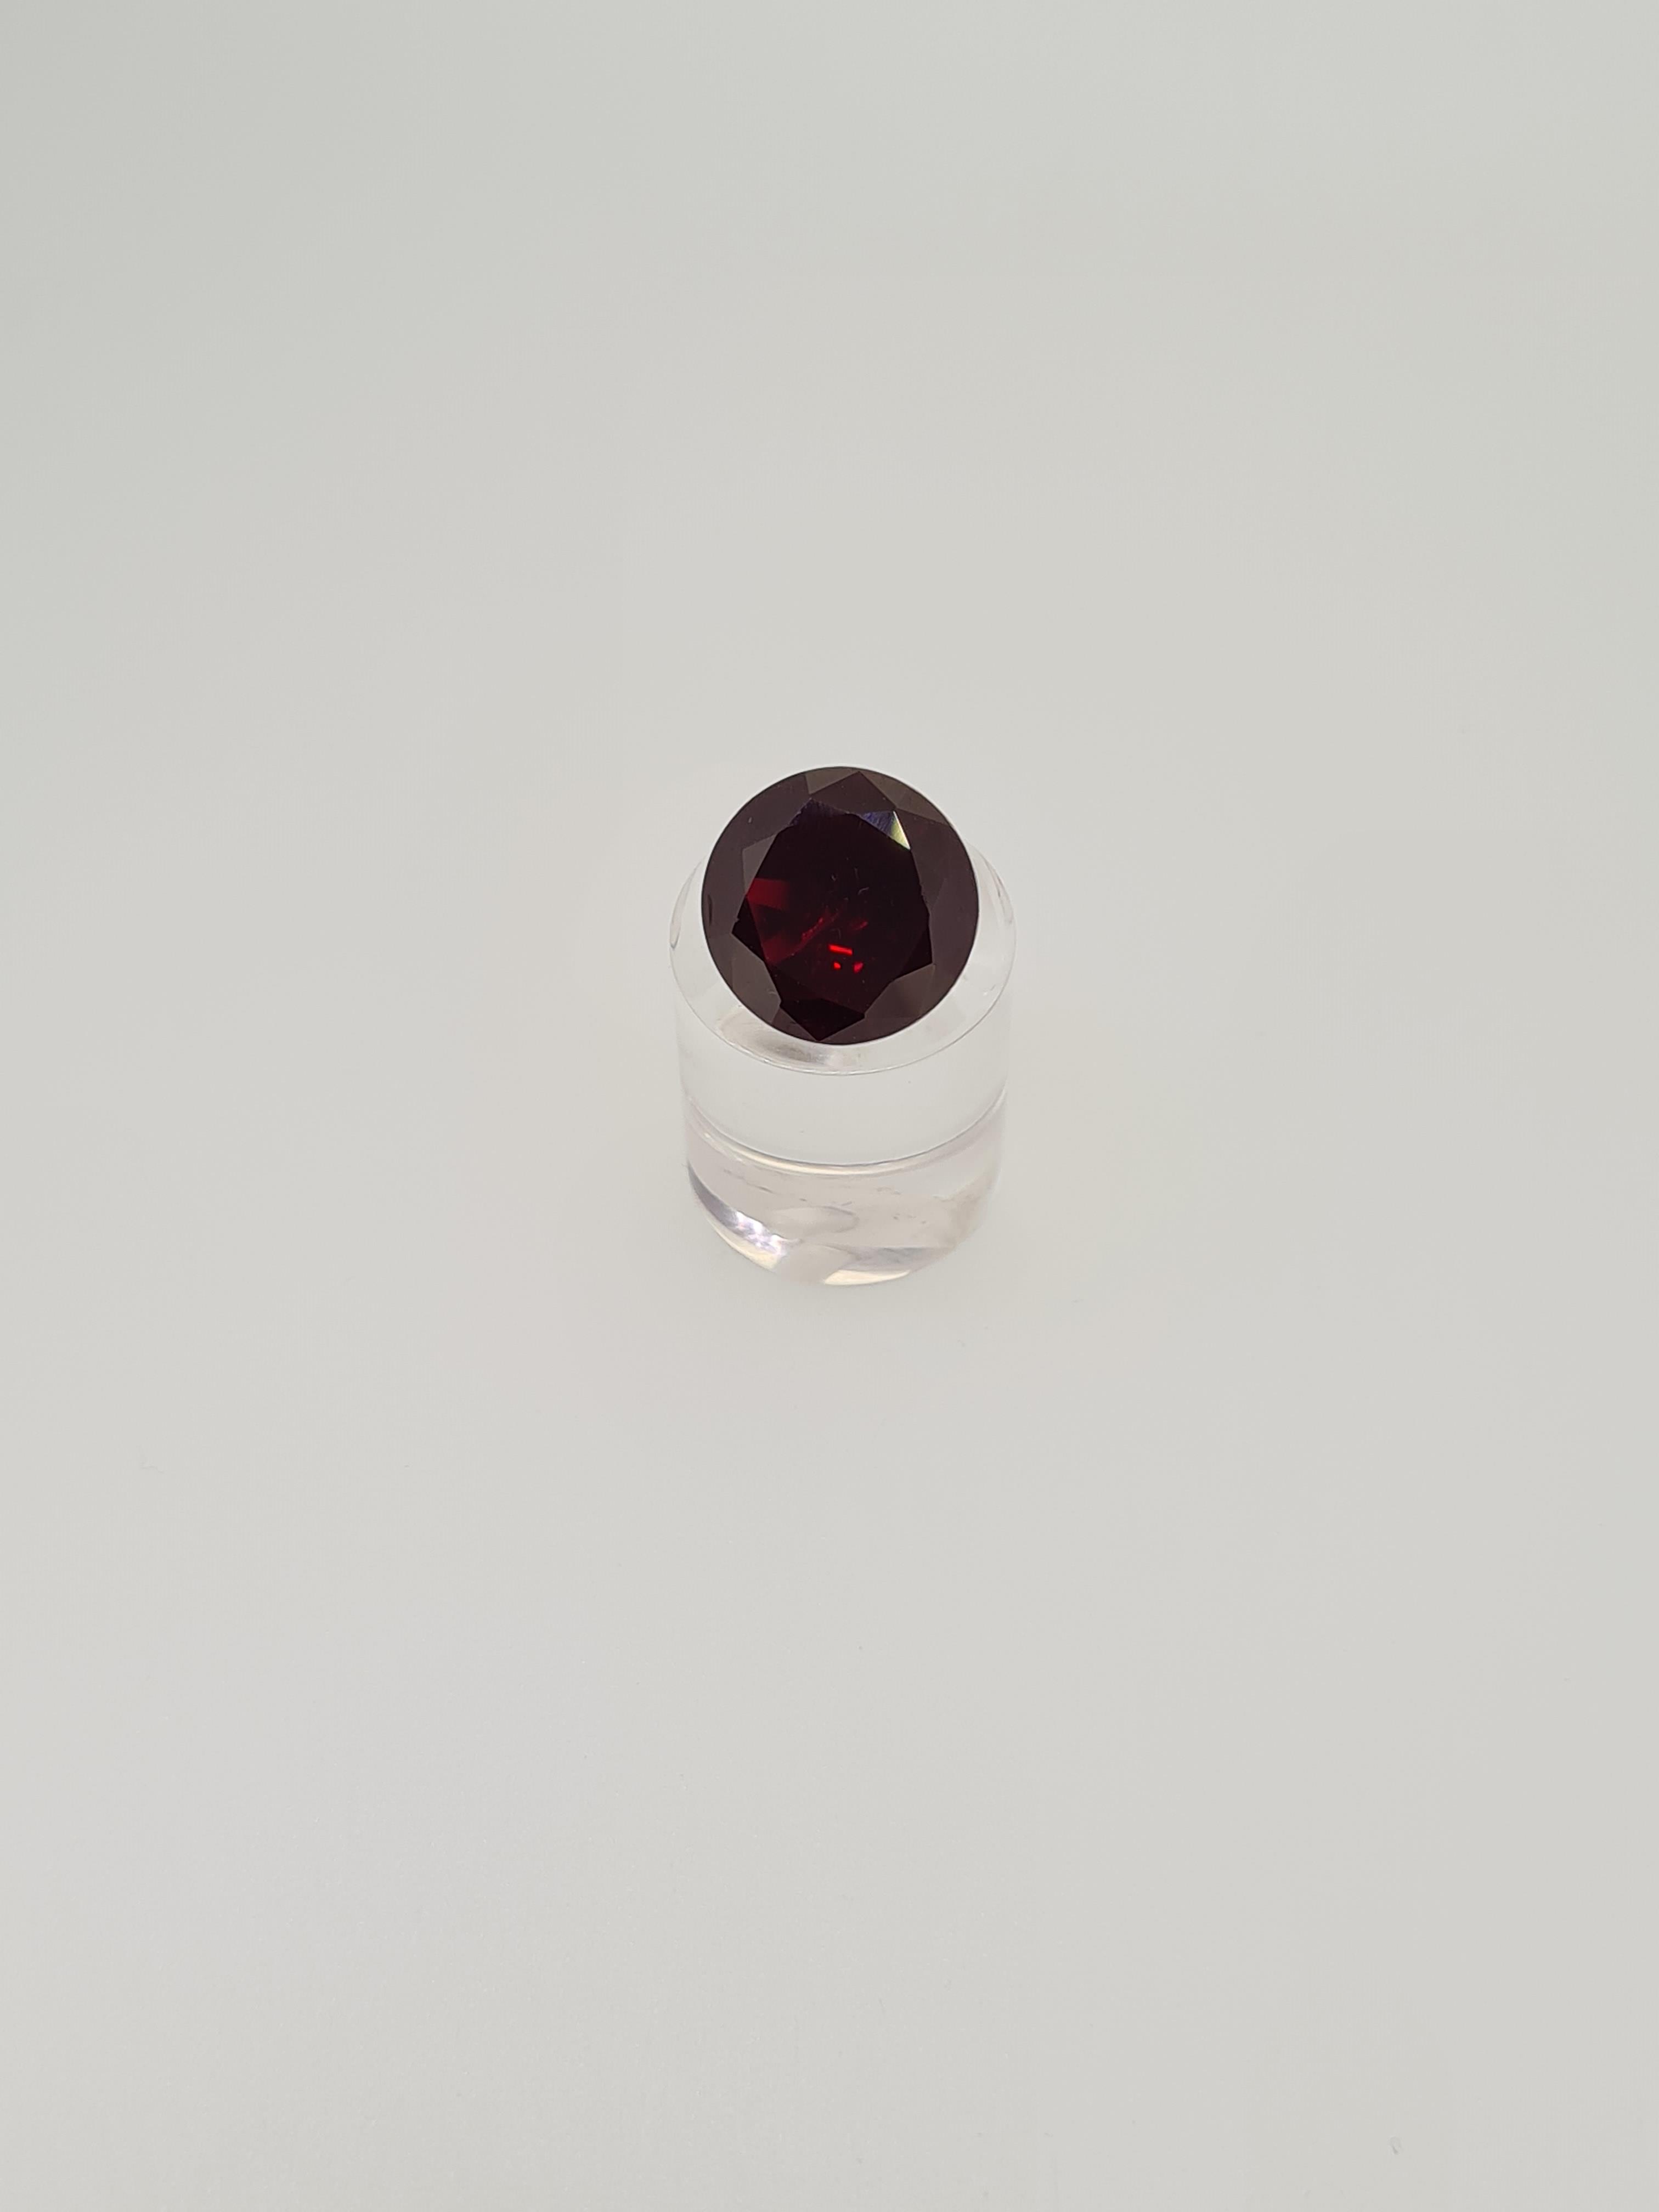 Garnet round cut gem stone - Image 3 of 6